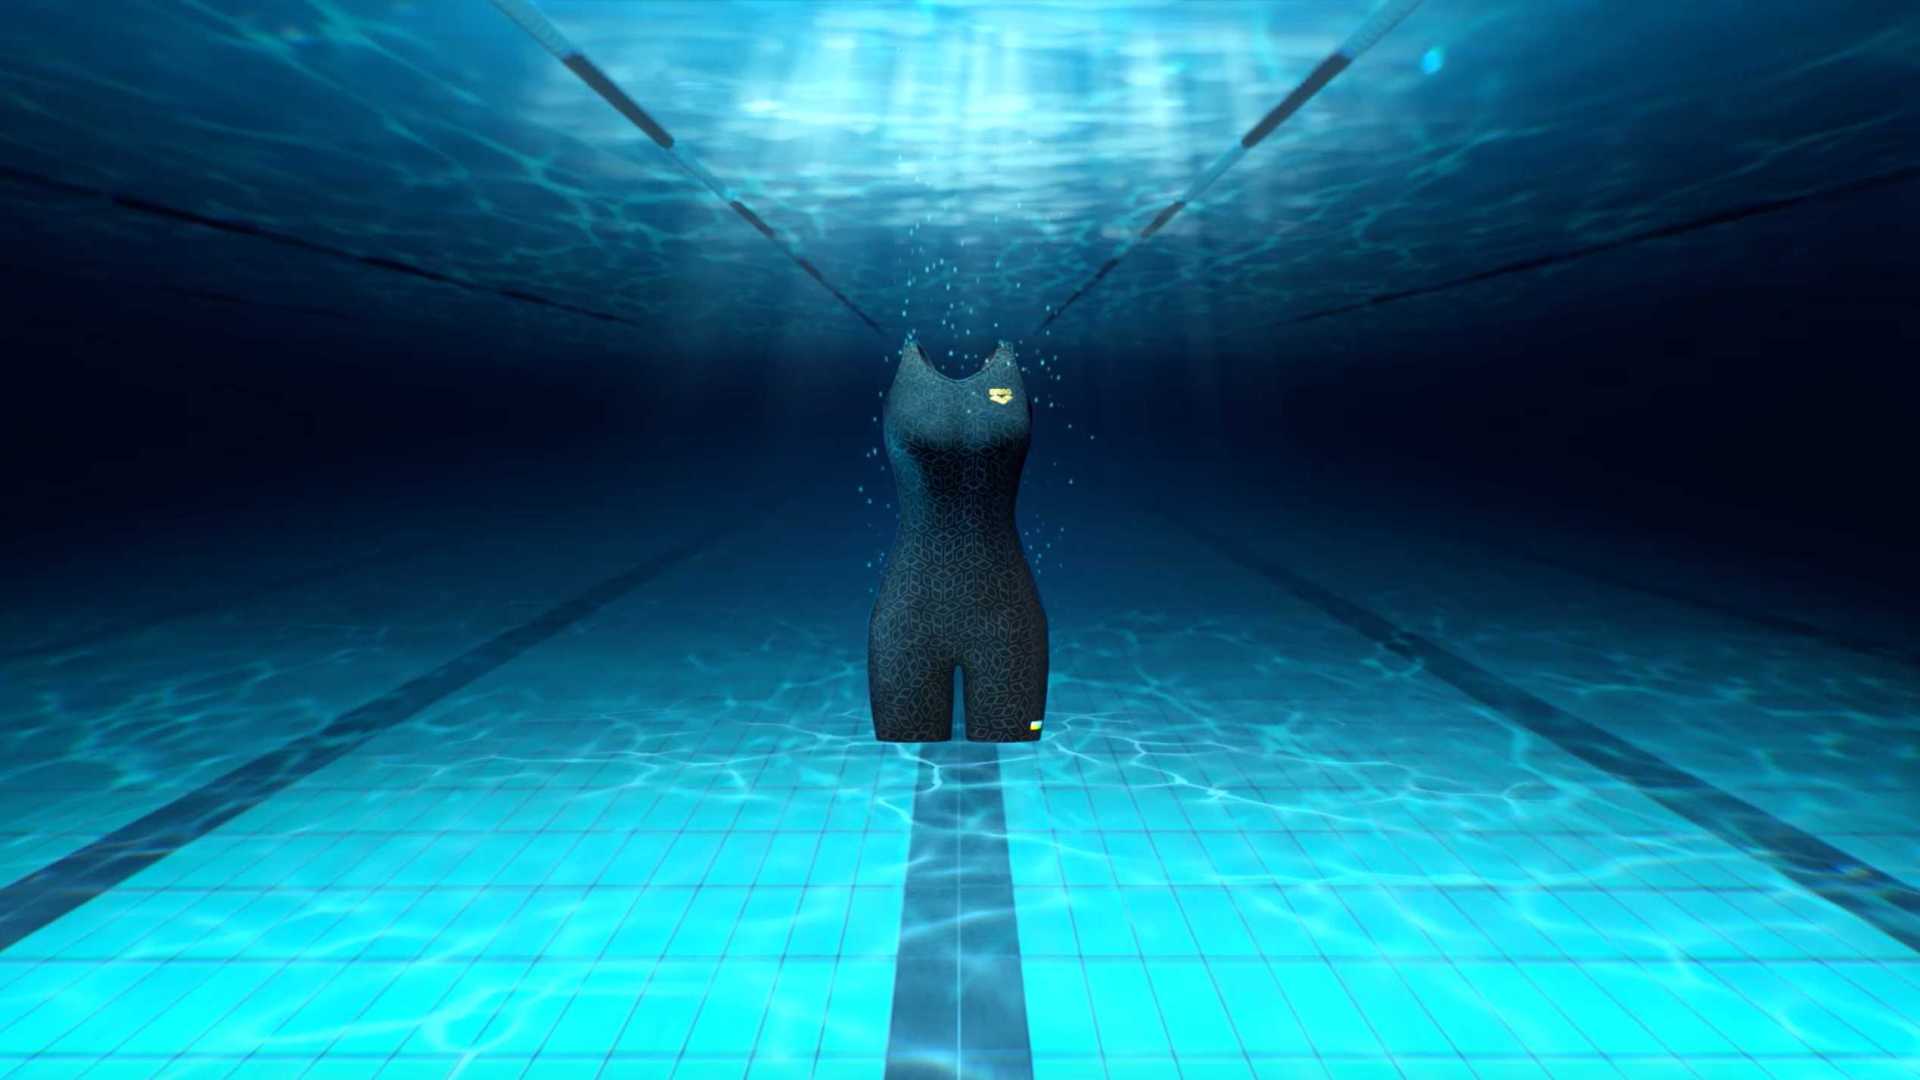 Arena竞速泳衣-CG概念篇